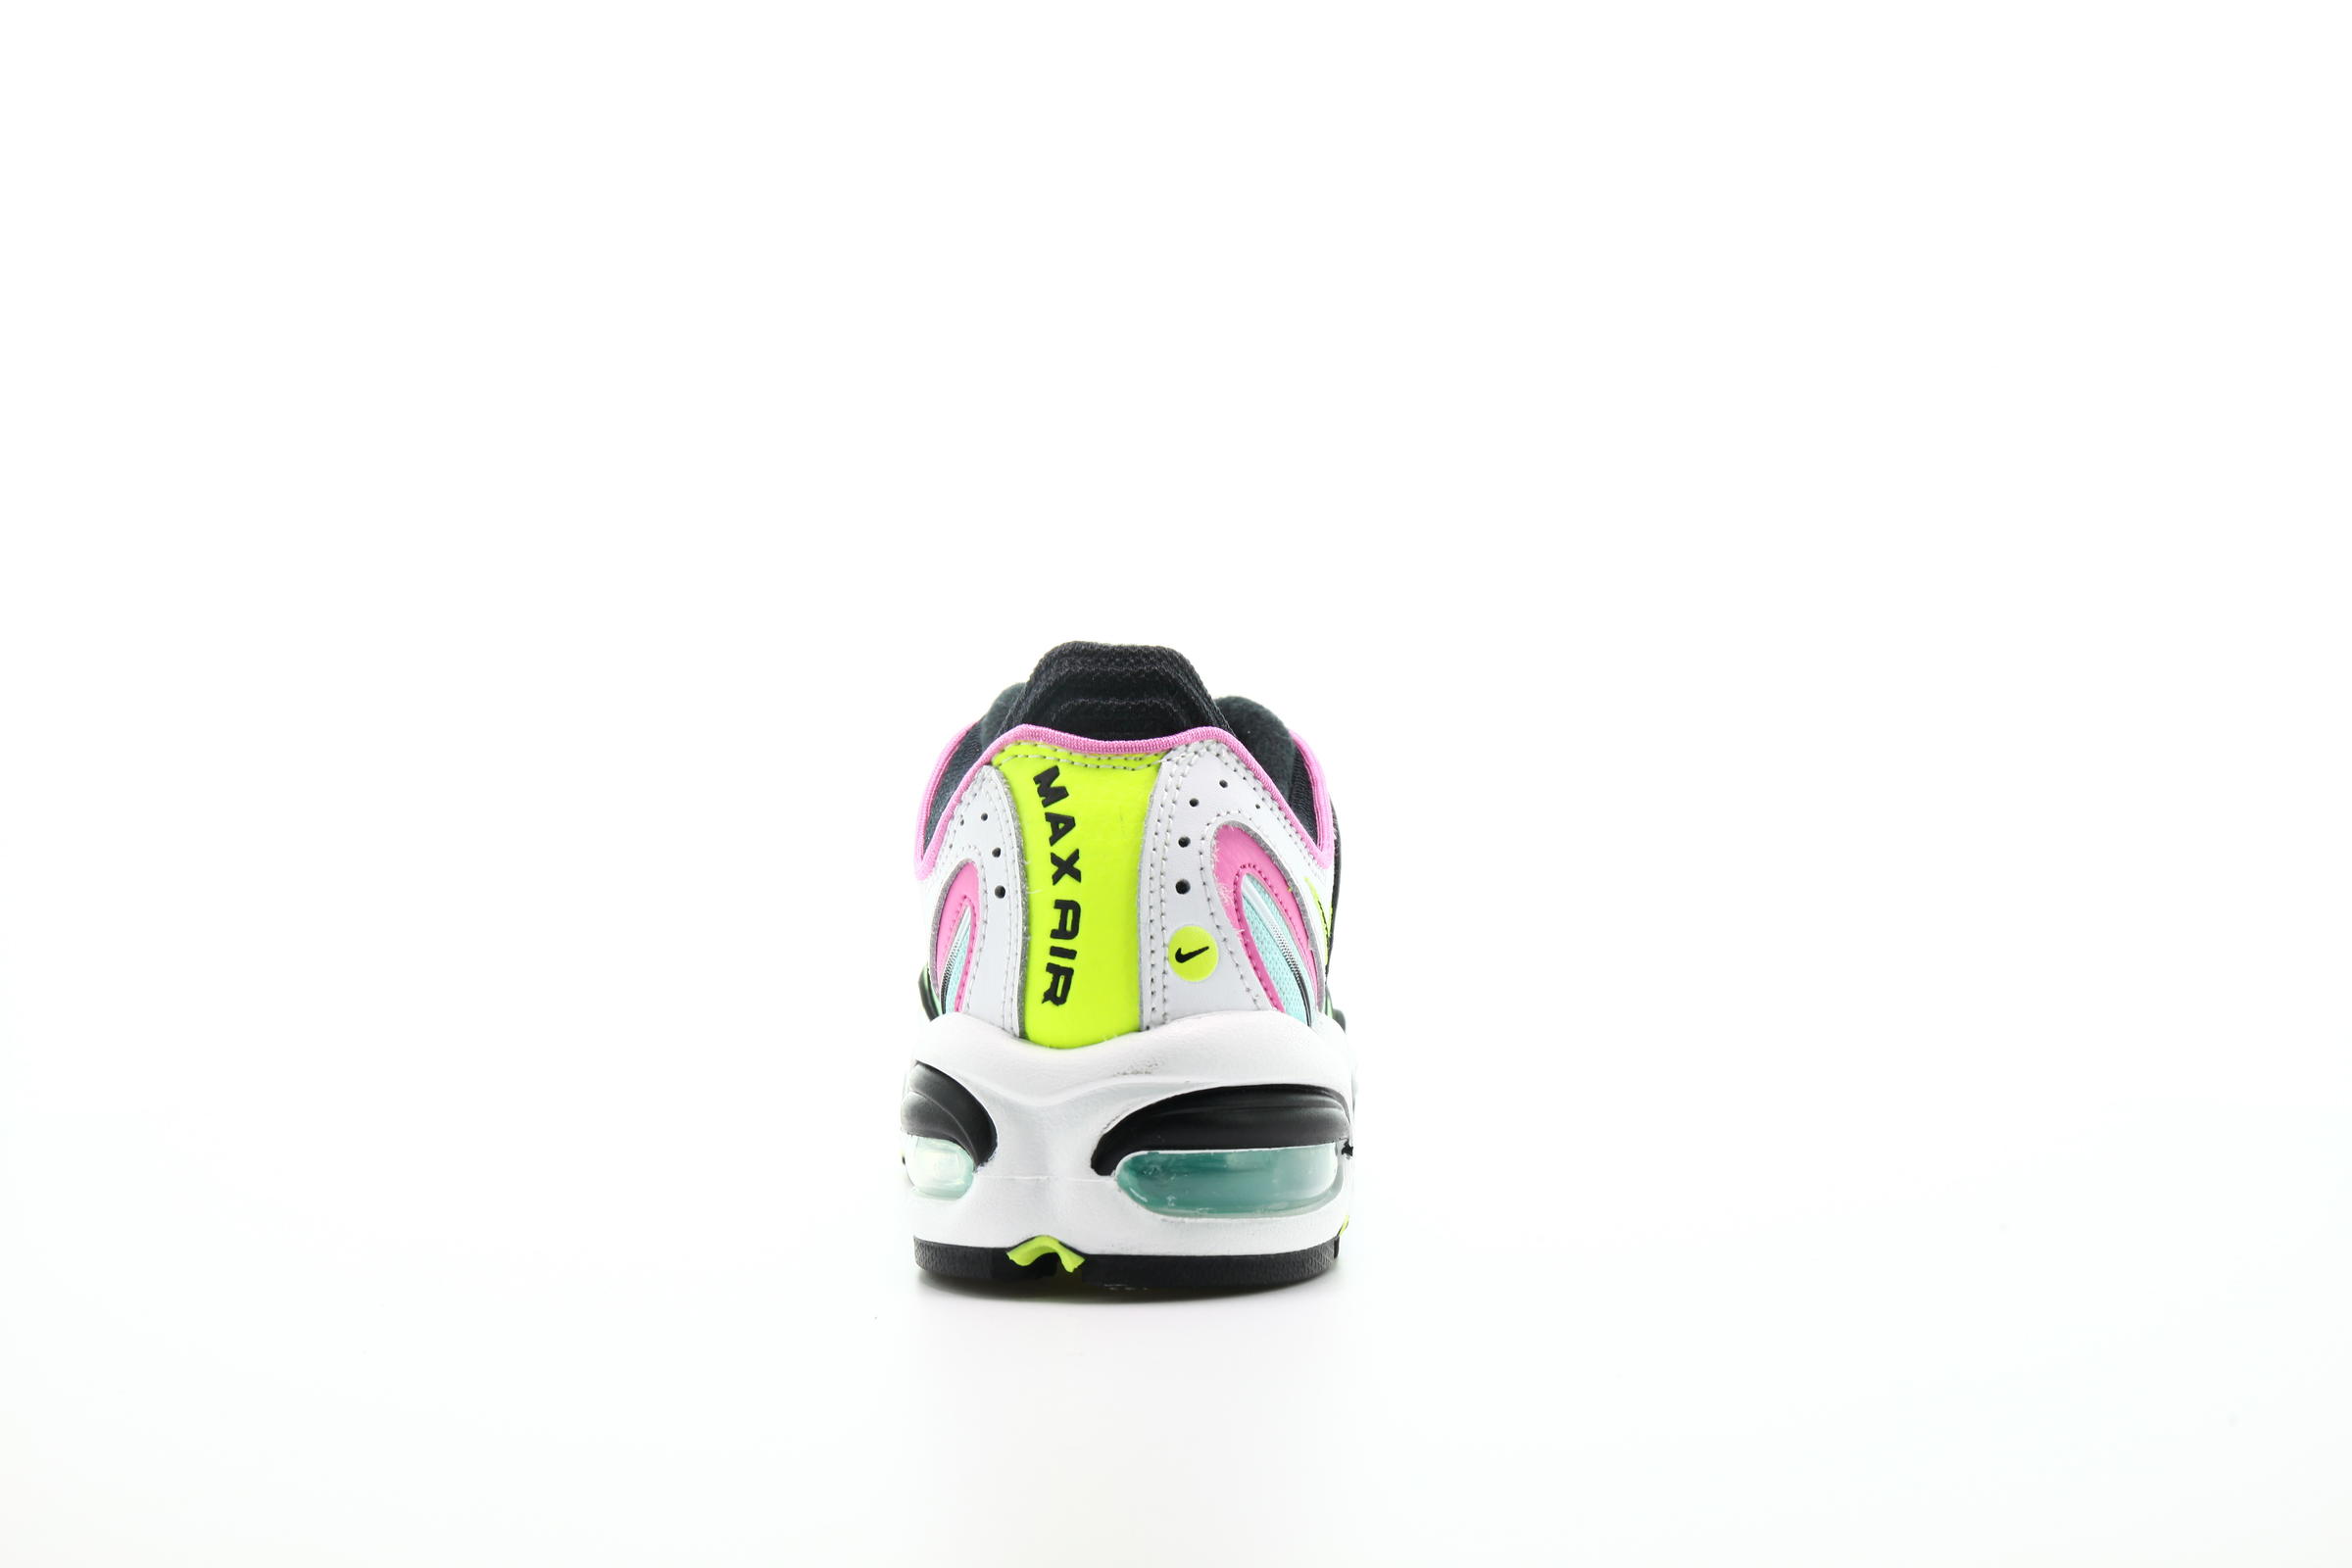 Nike Air Max Tailwind IV "Multicolor"